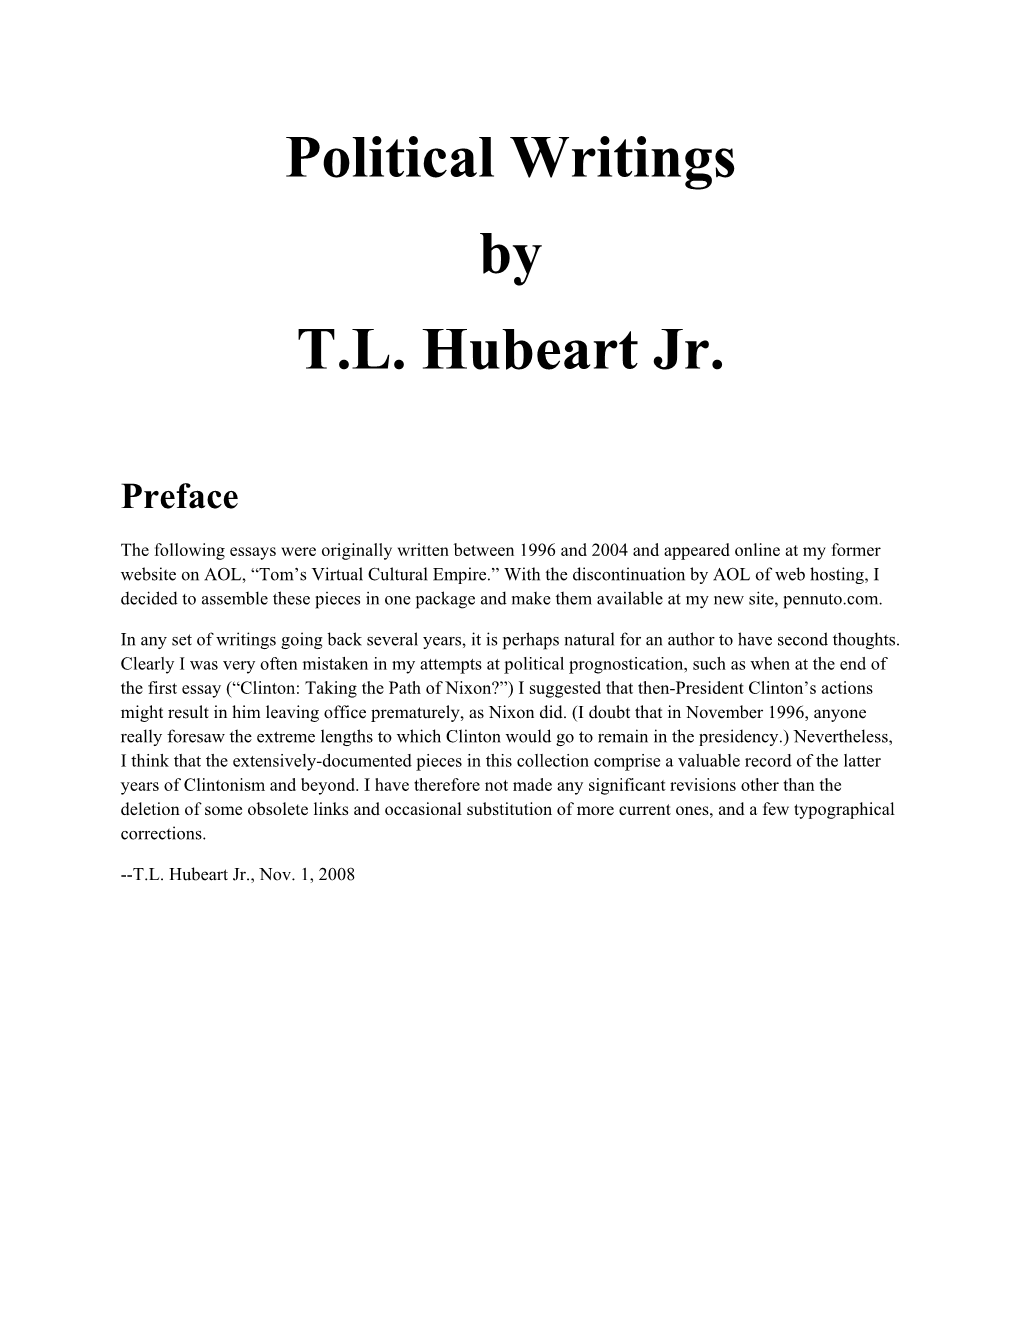 Political Writings (1996-2004)